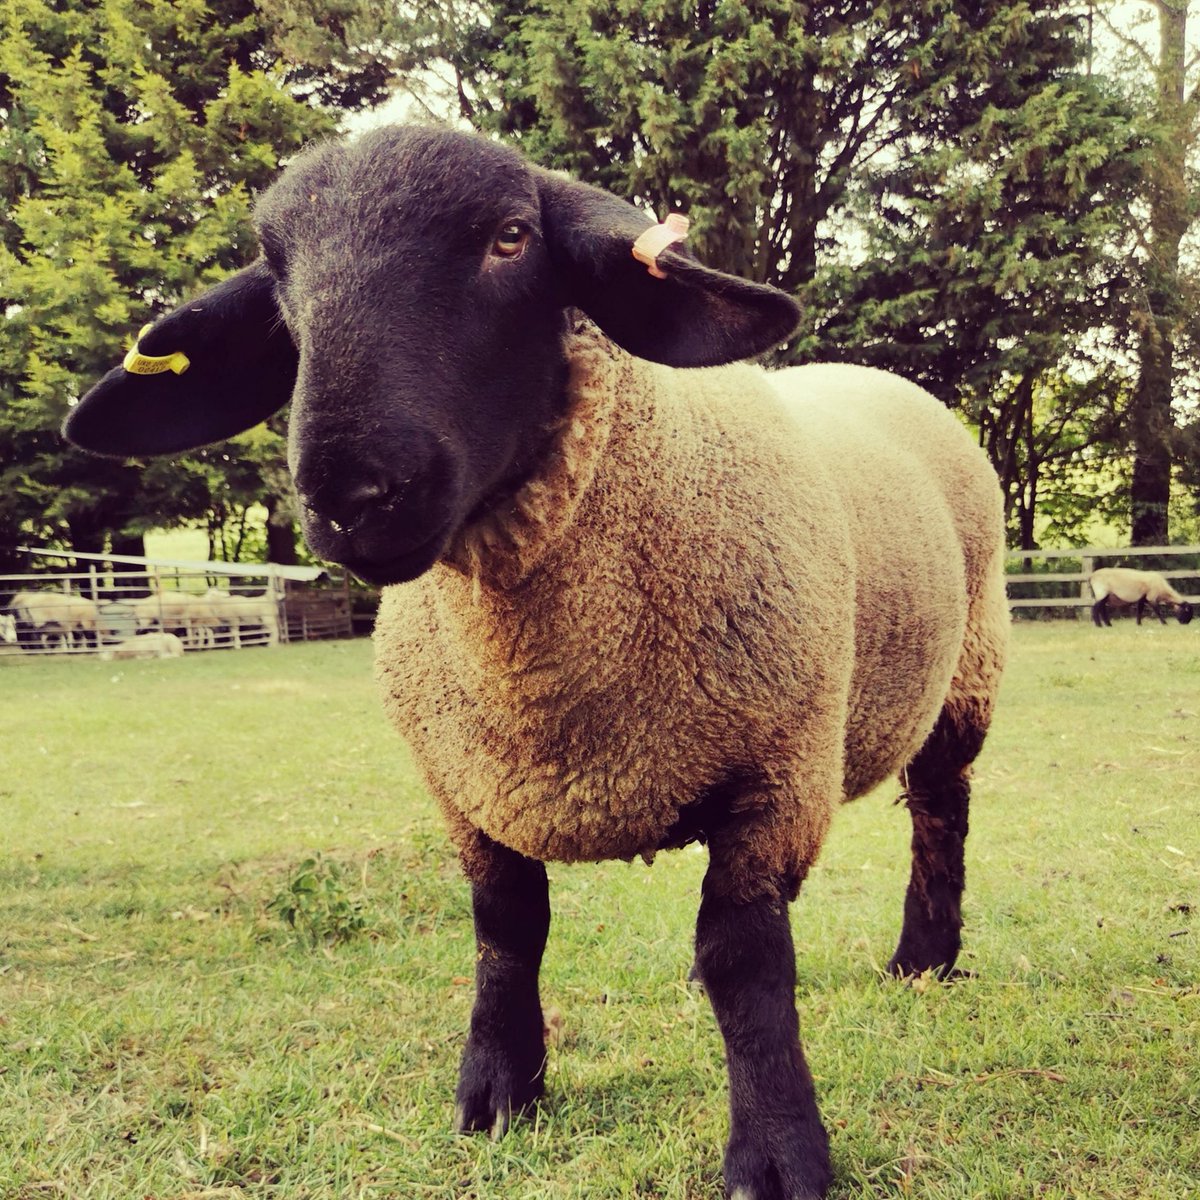 New blog post about my latest sheep drama... 'My Twilight saga' myflockandi.com/my-twilight-sa…
#sheep #sheepfarminguk #shepherdesslife #shepherdess #lambdrama #sheepstories #supportbritishfarming #myflockandi